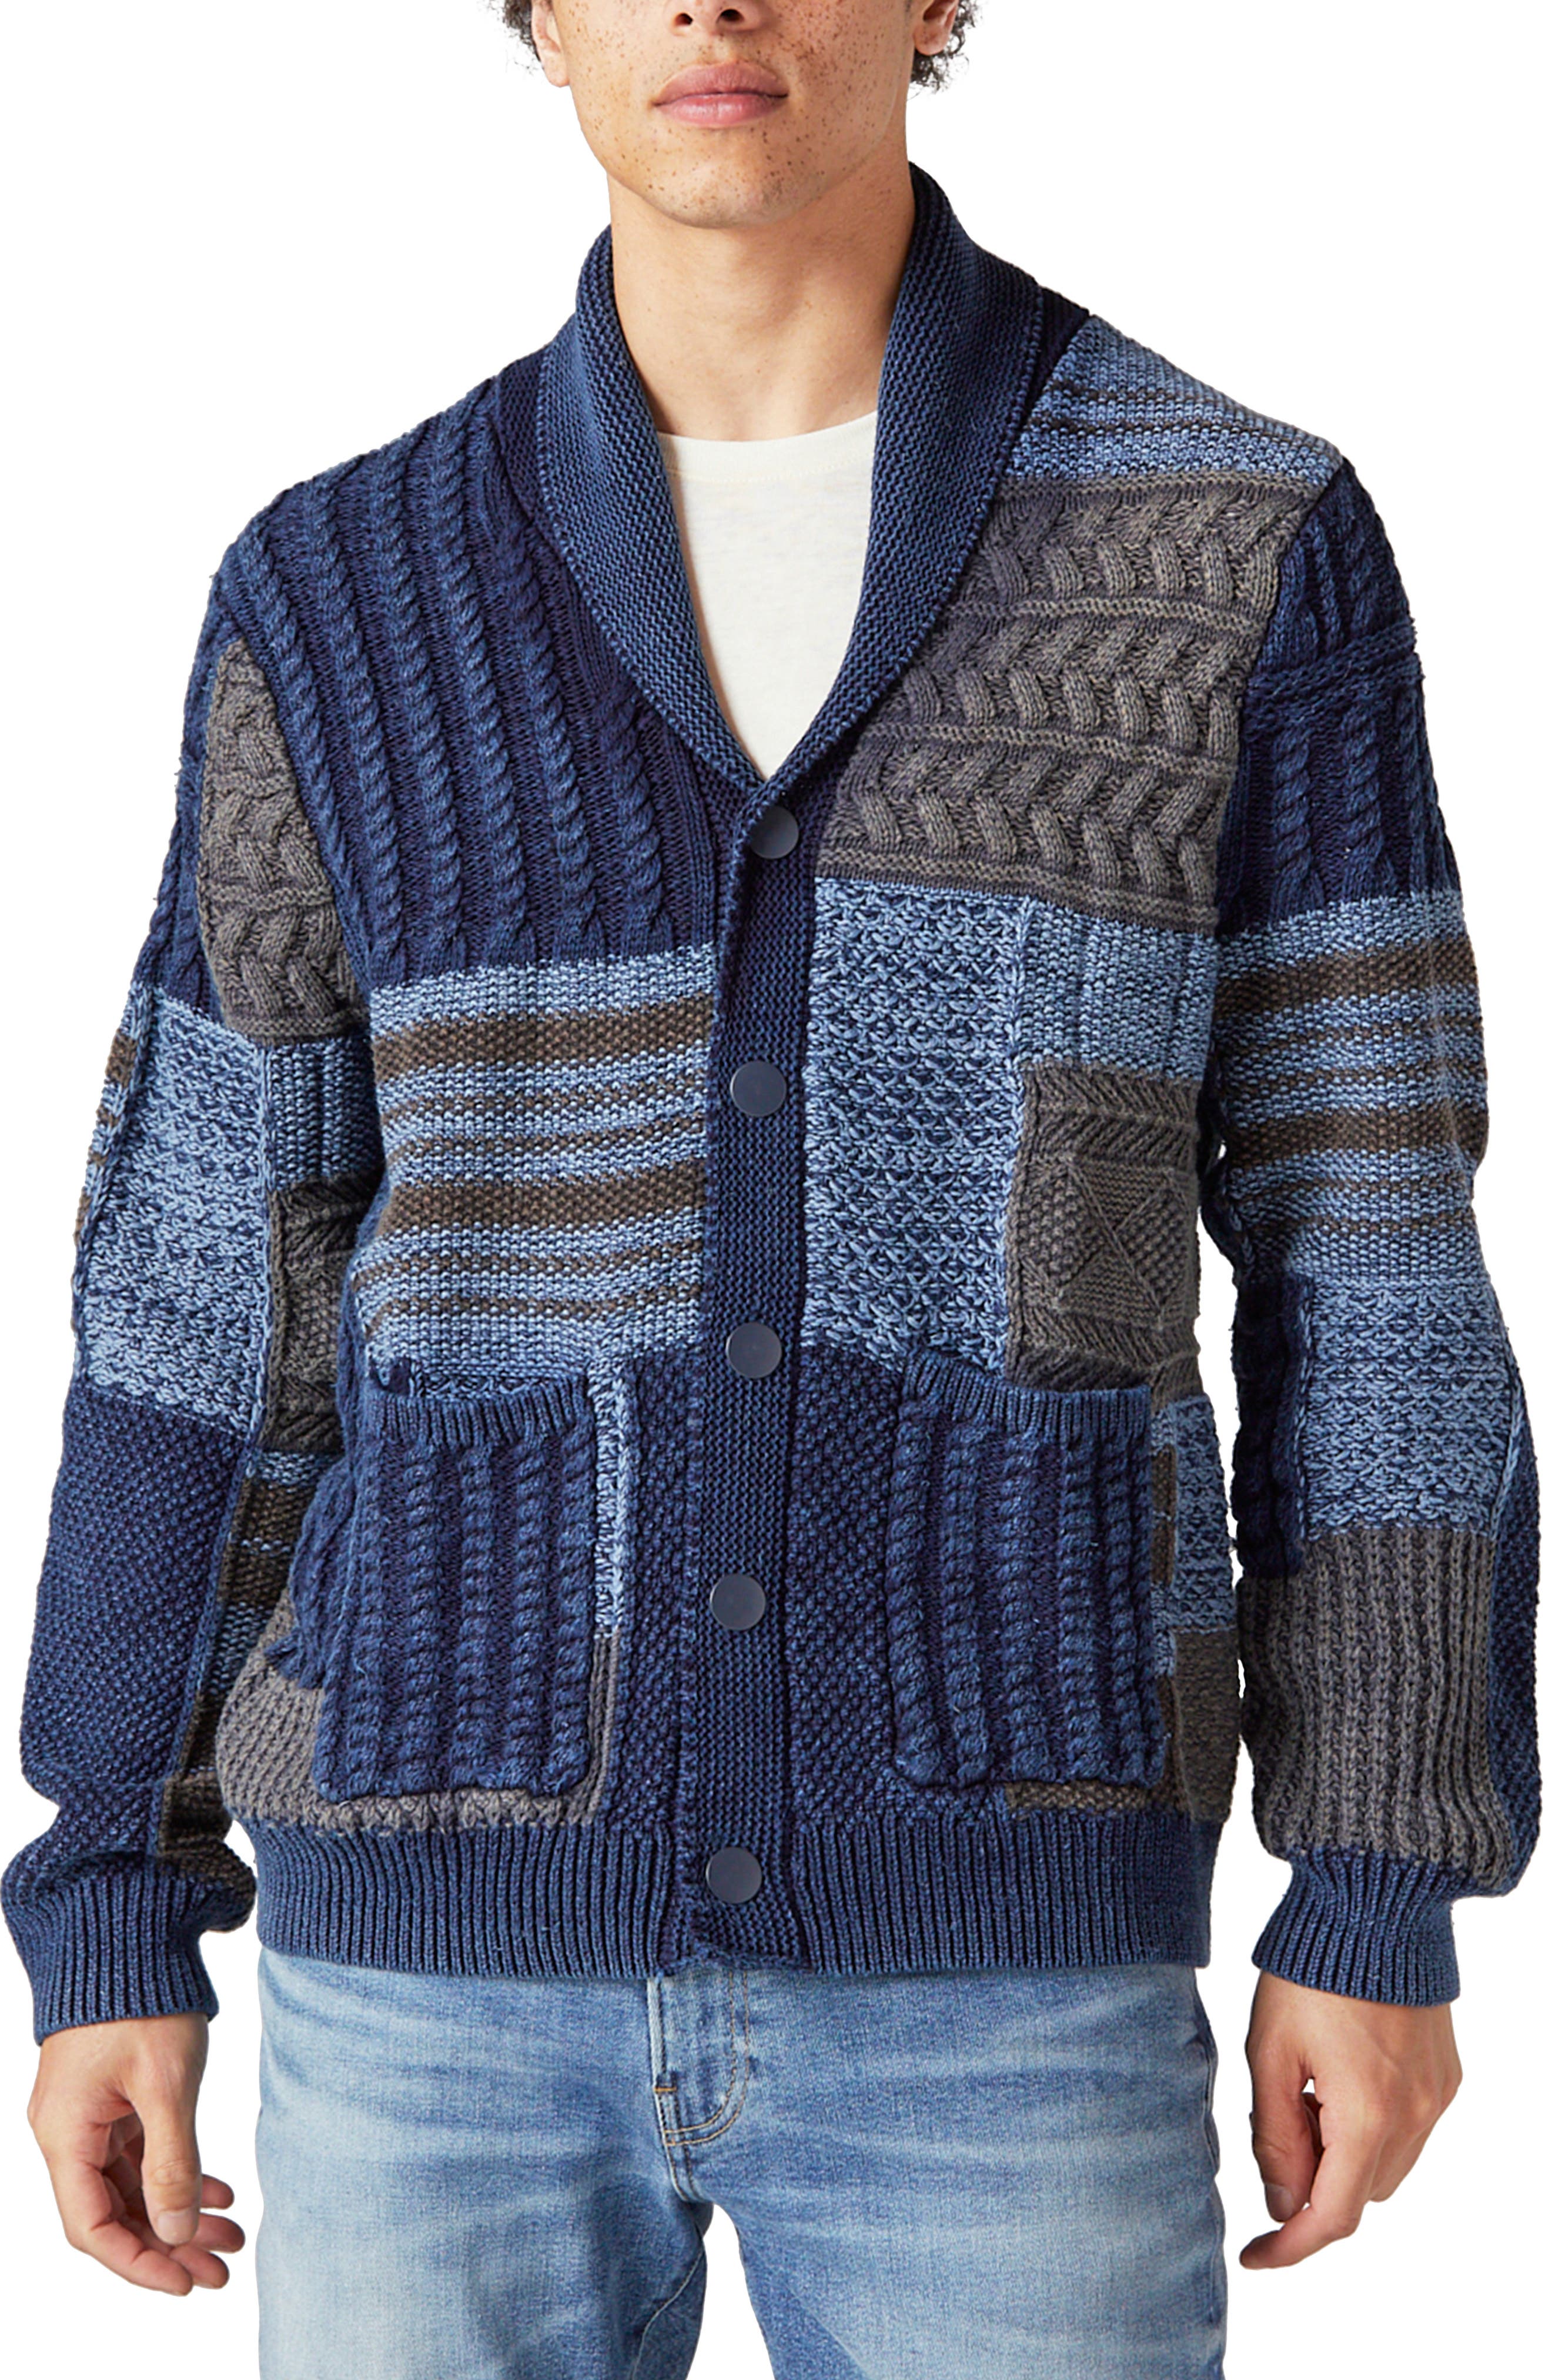 YSNJL Mens Shawl Collar Cardigan Sweater Knitwear 